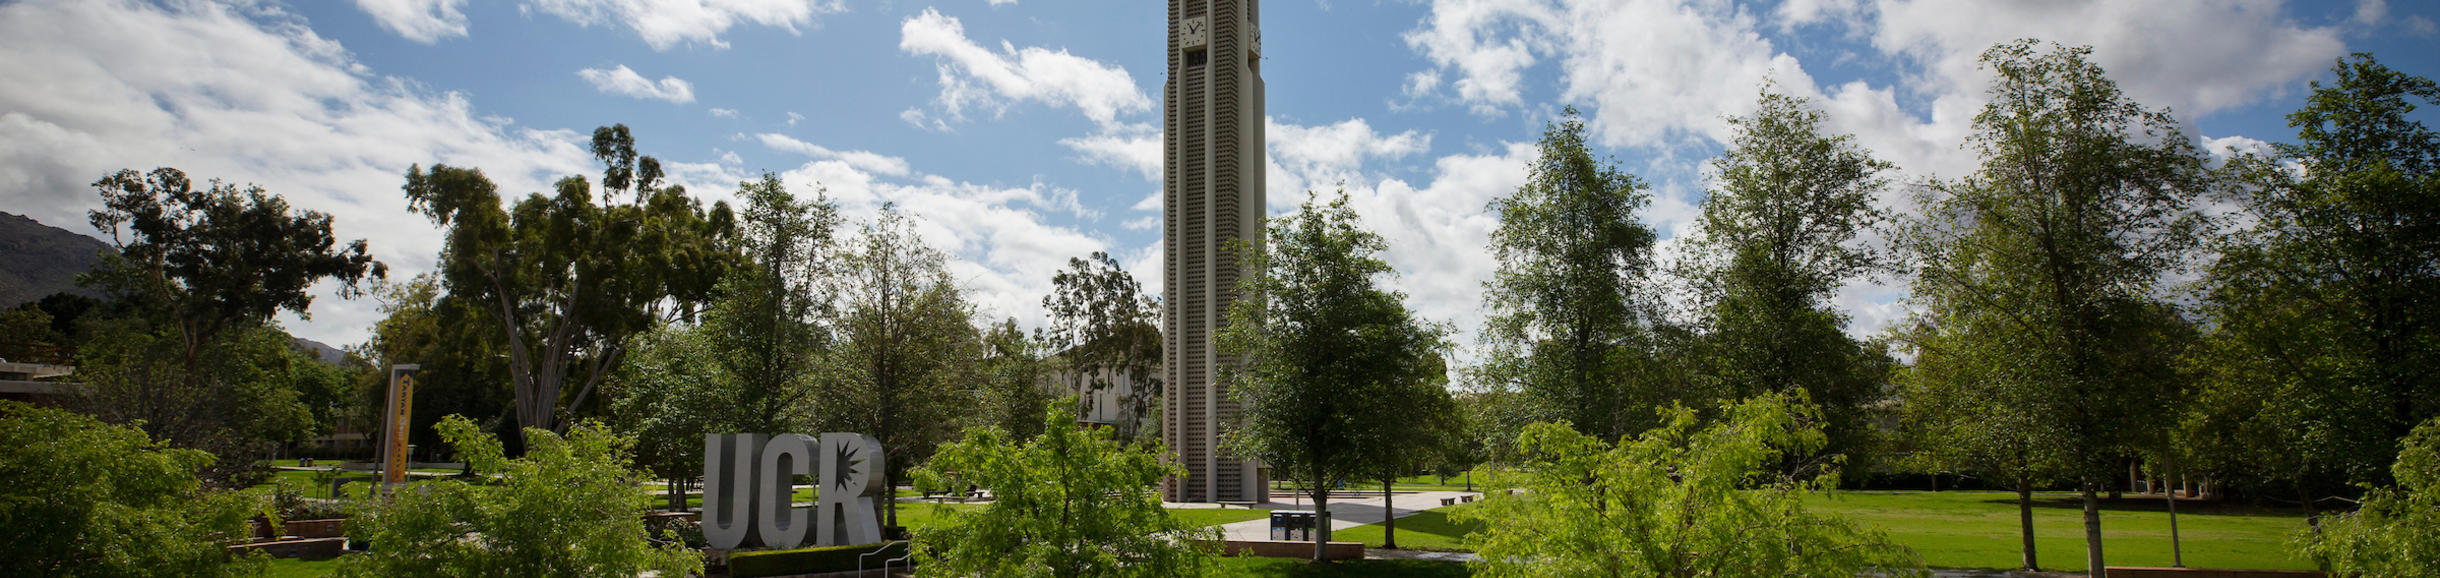 UCR Belltower and UCR Statue